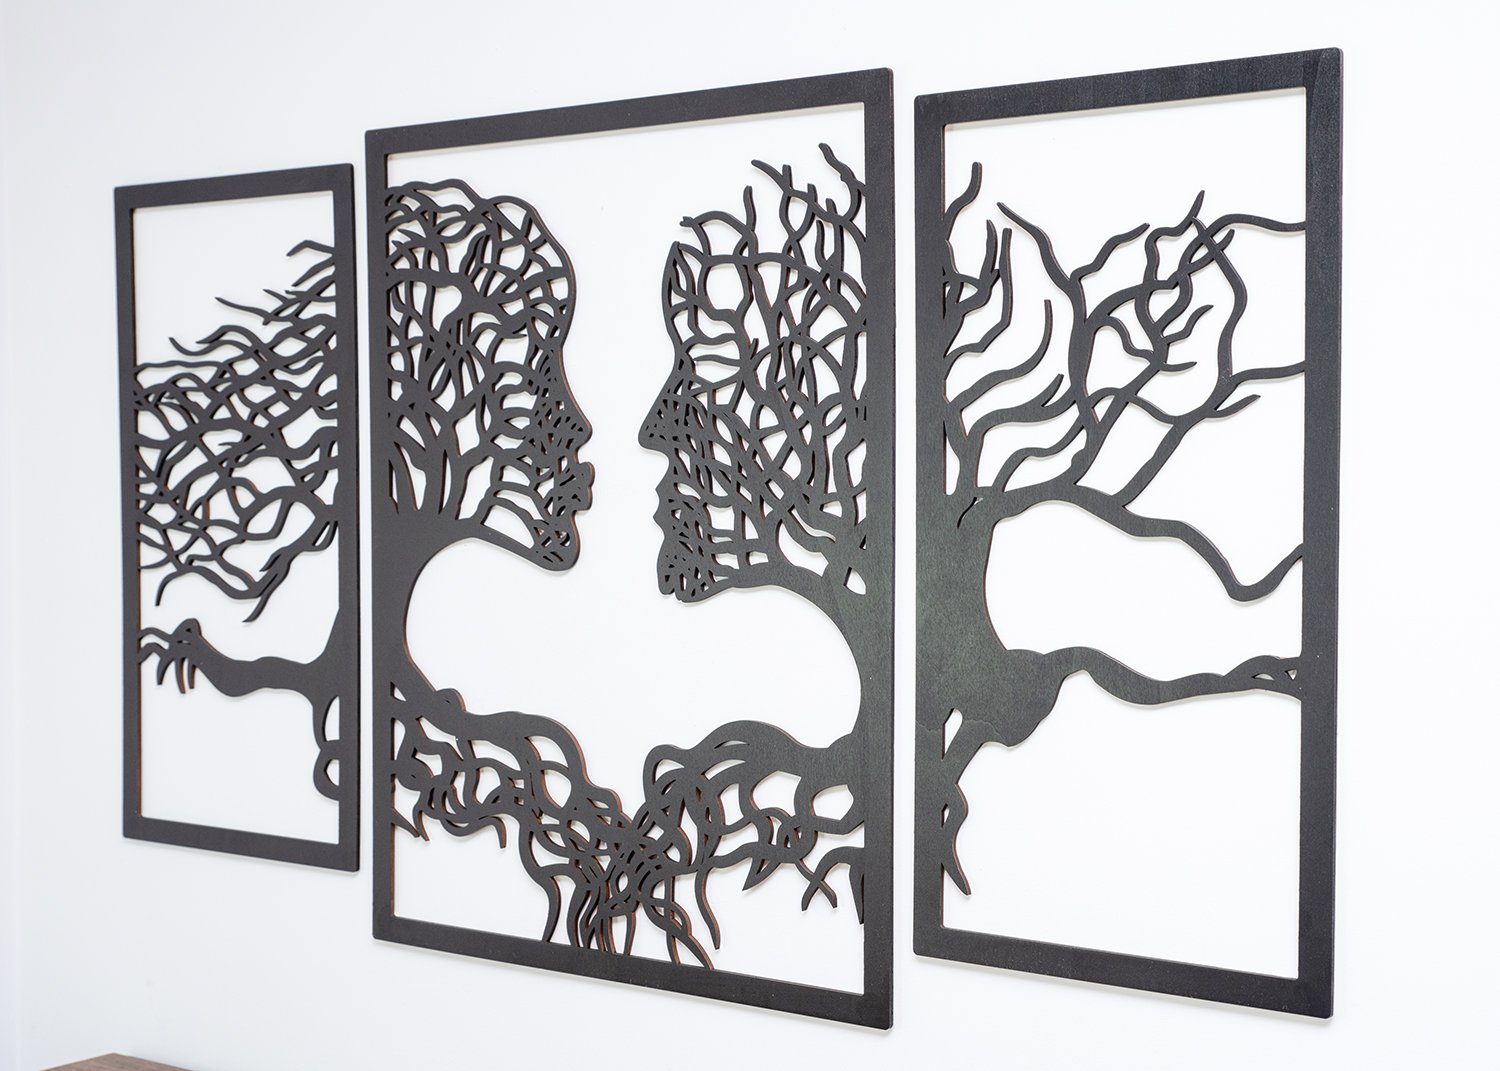 ORNAMENTI Holzbild 3D grosse Wandpaneel Wanddekoration, Handmade Baum, Gesichter